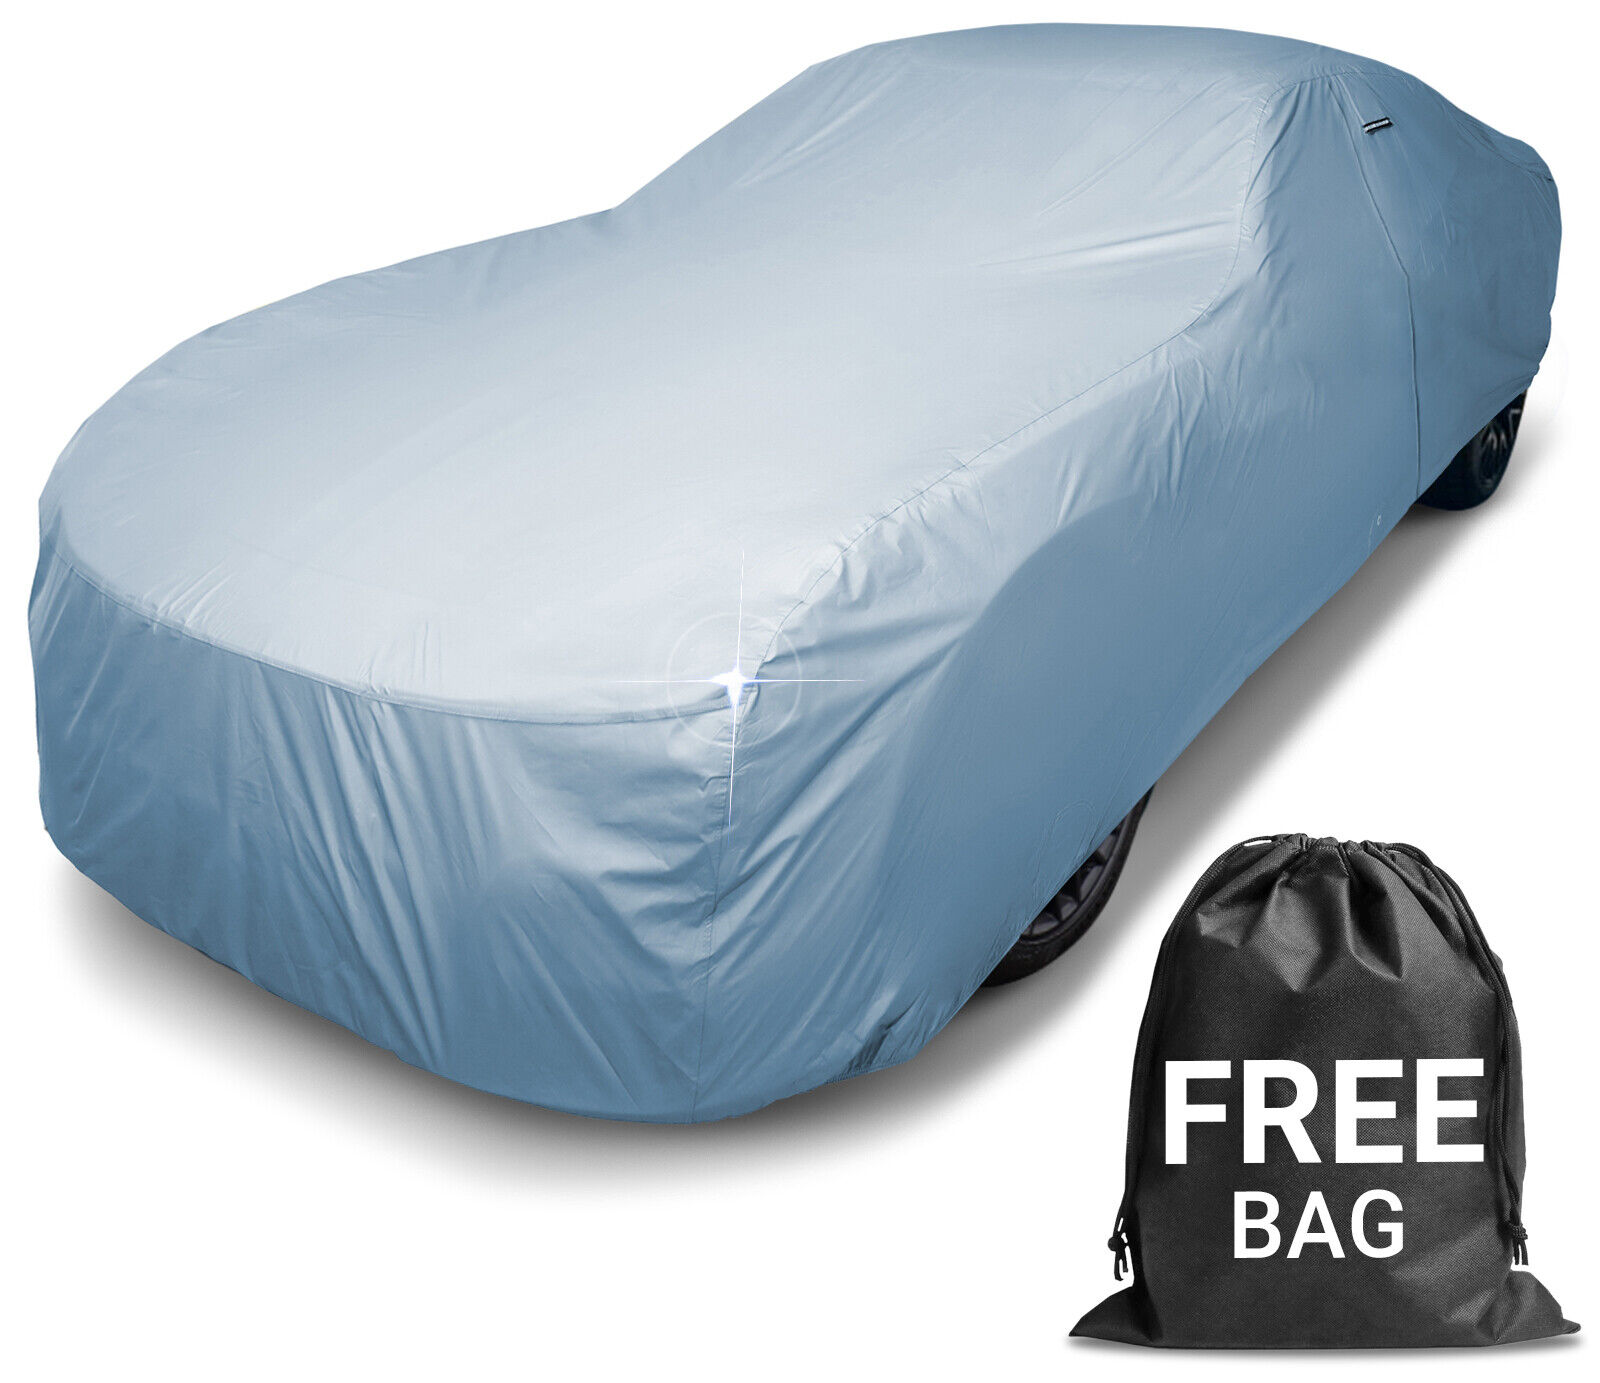 For FERRARI [ENZO] Premium Custom-Fit Outdoor Waterproof Car Cover Indoor